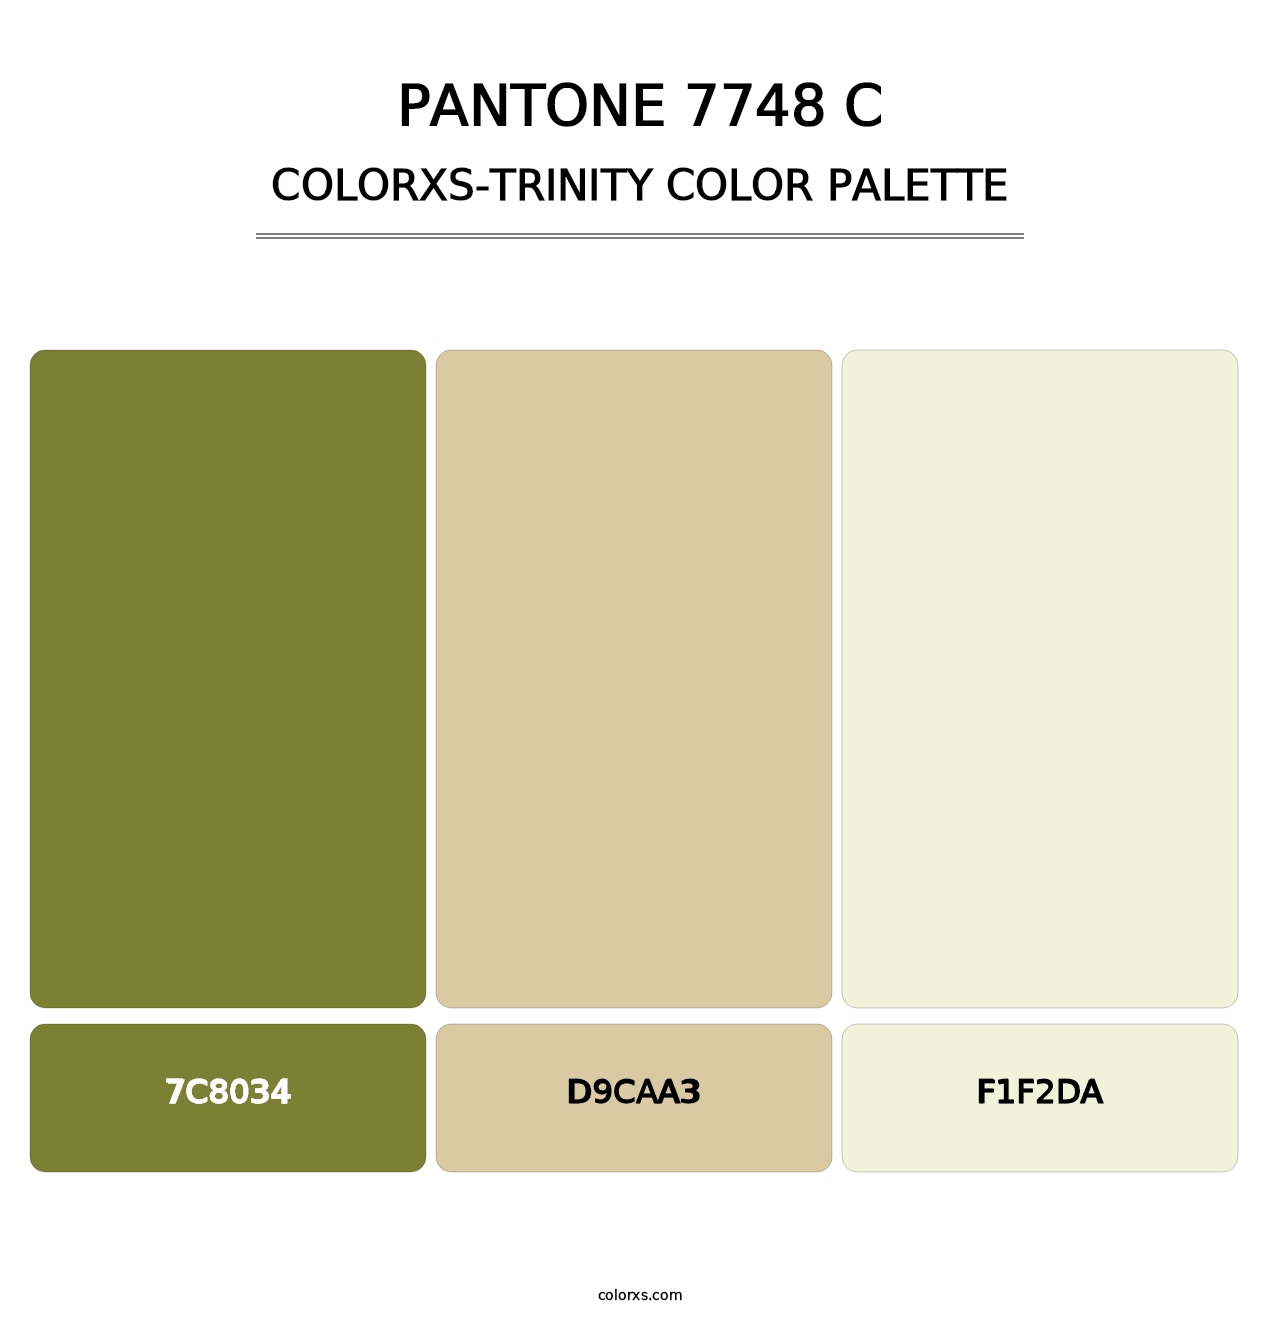 PANTONE 7748 C - Colorxs Trinity Palette